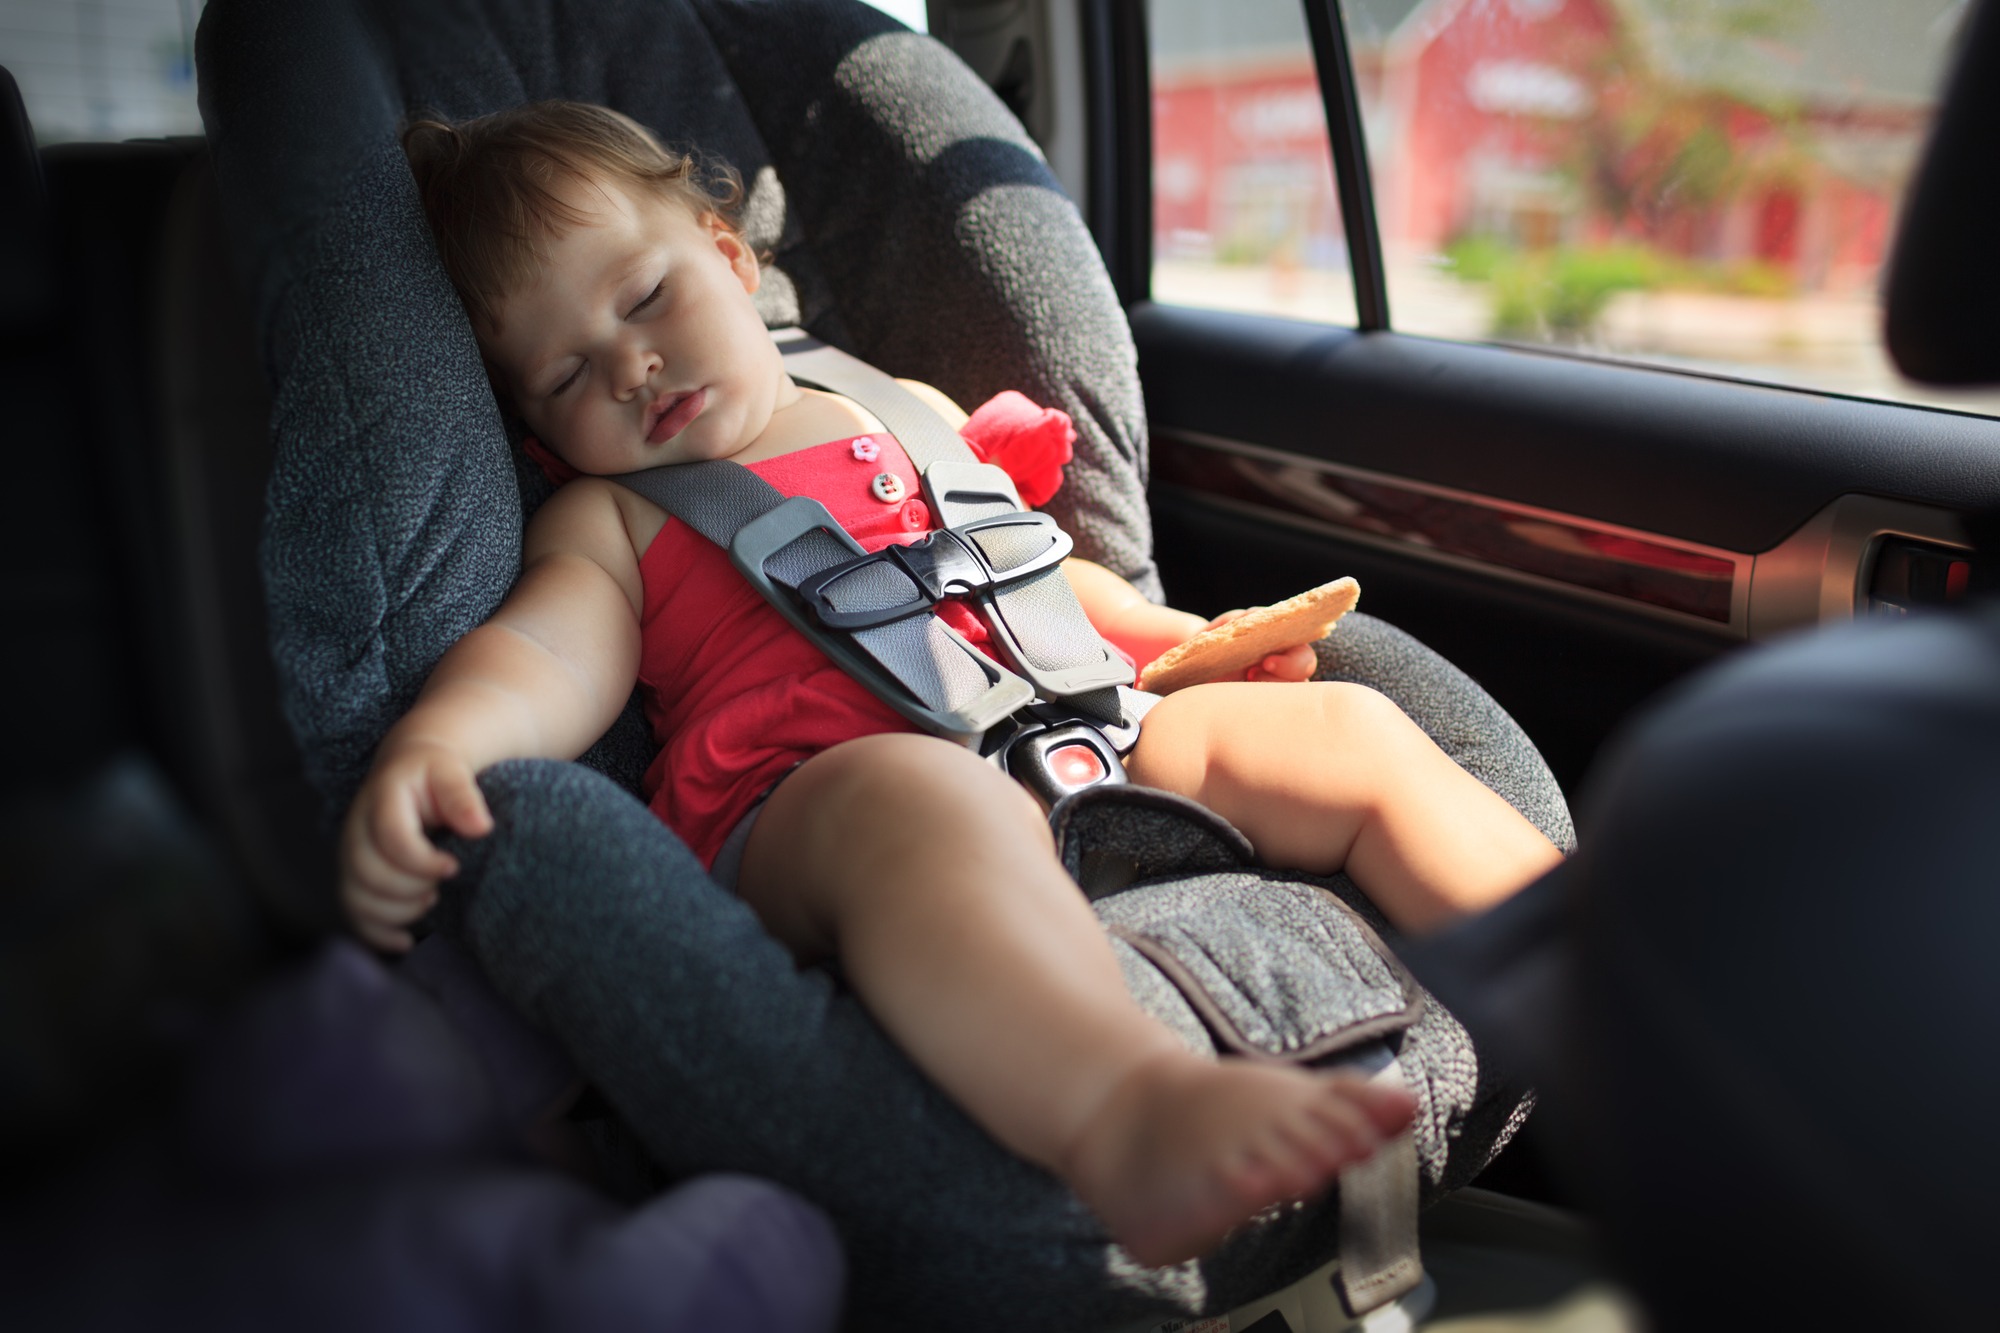 «Если в машине ребенок, то минус 20 км/ч от скорости» - новая инициатива ГИБДД